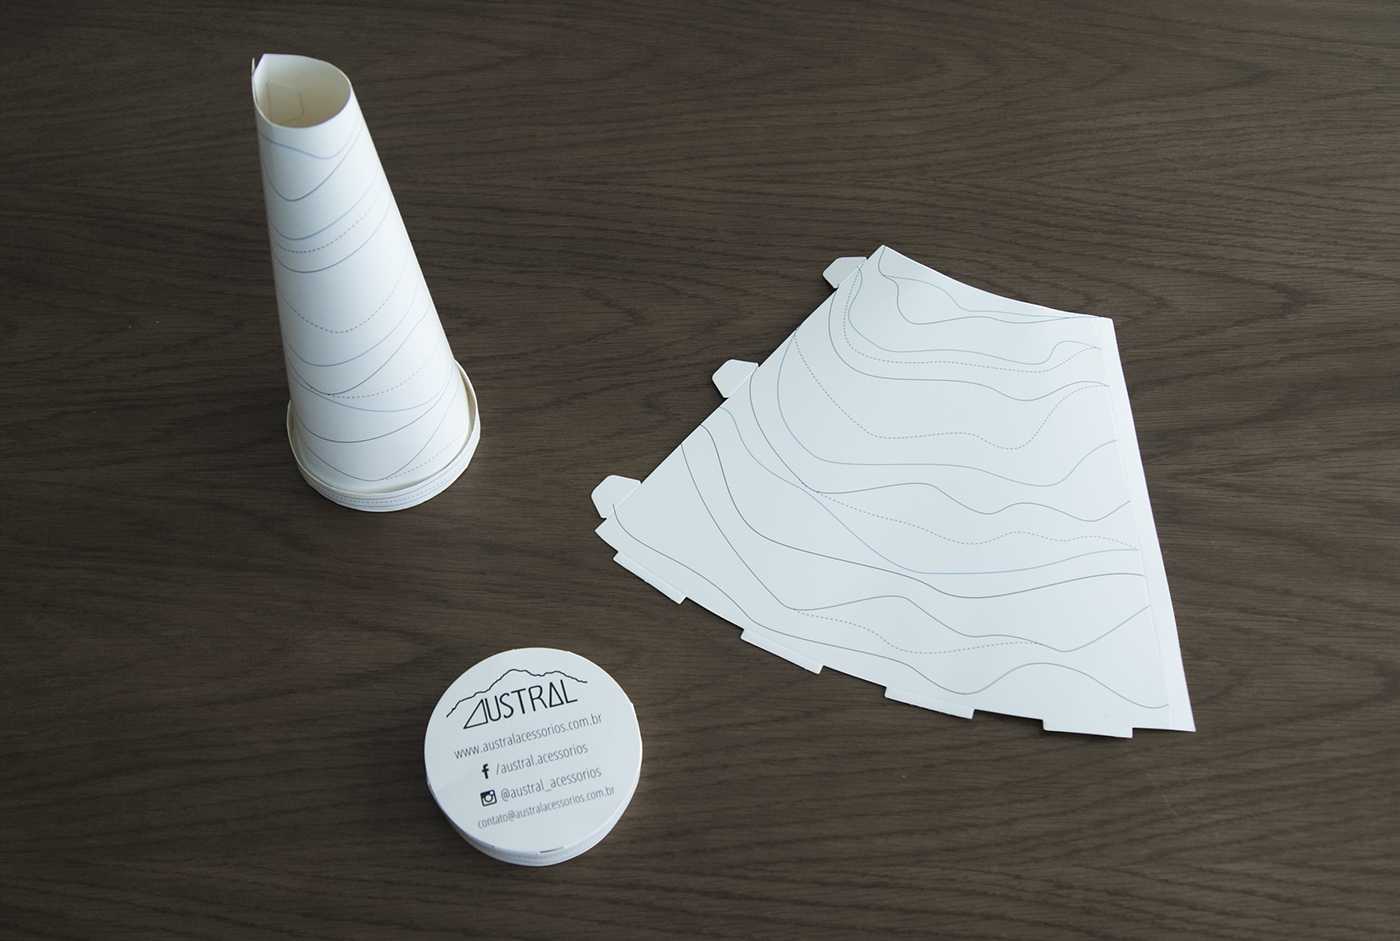 embalagem imballaggio jewels joias grafico brand austral Papel seda Silk Paper carta seta inovação Lúdico graphic stampa gioielli